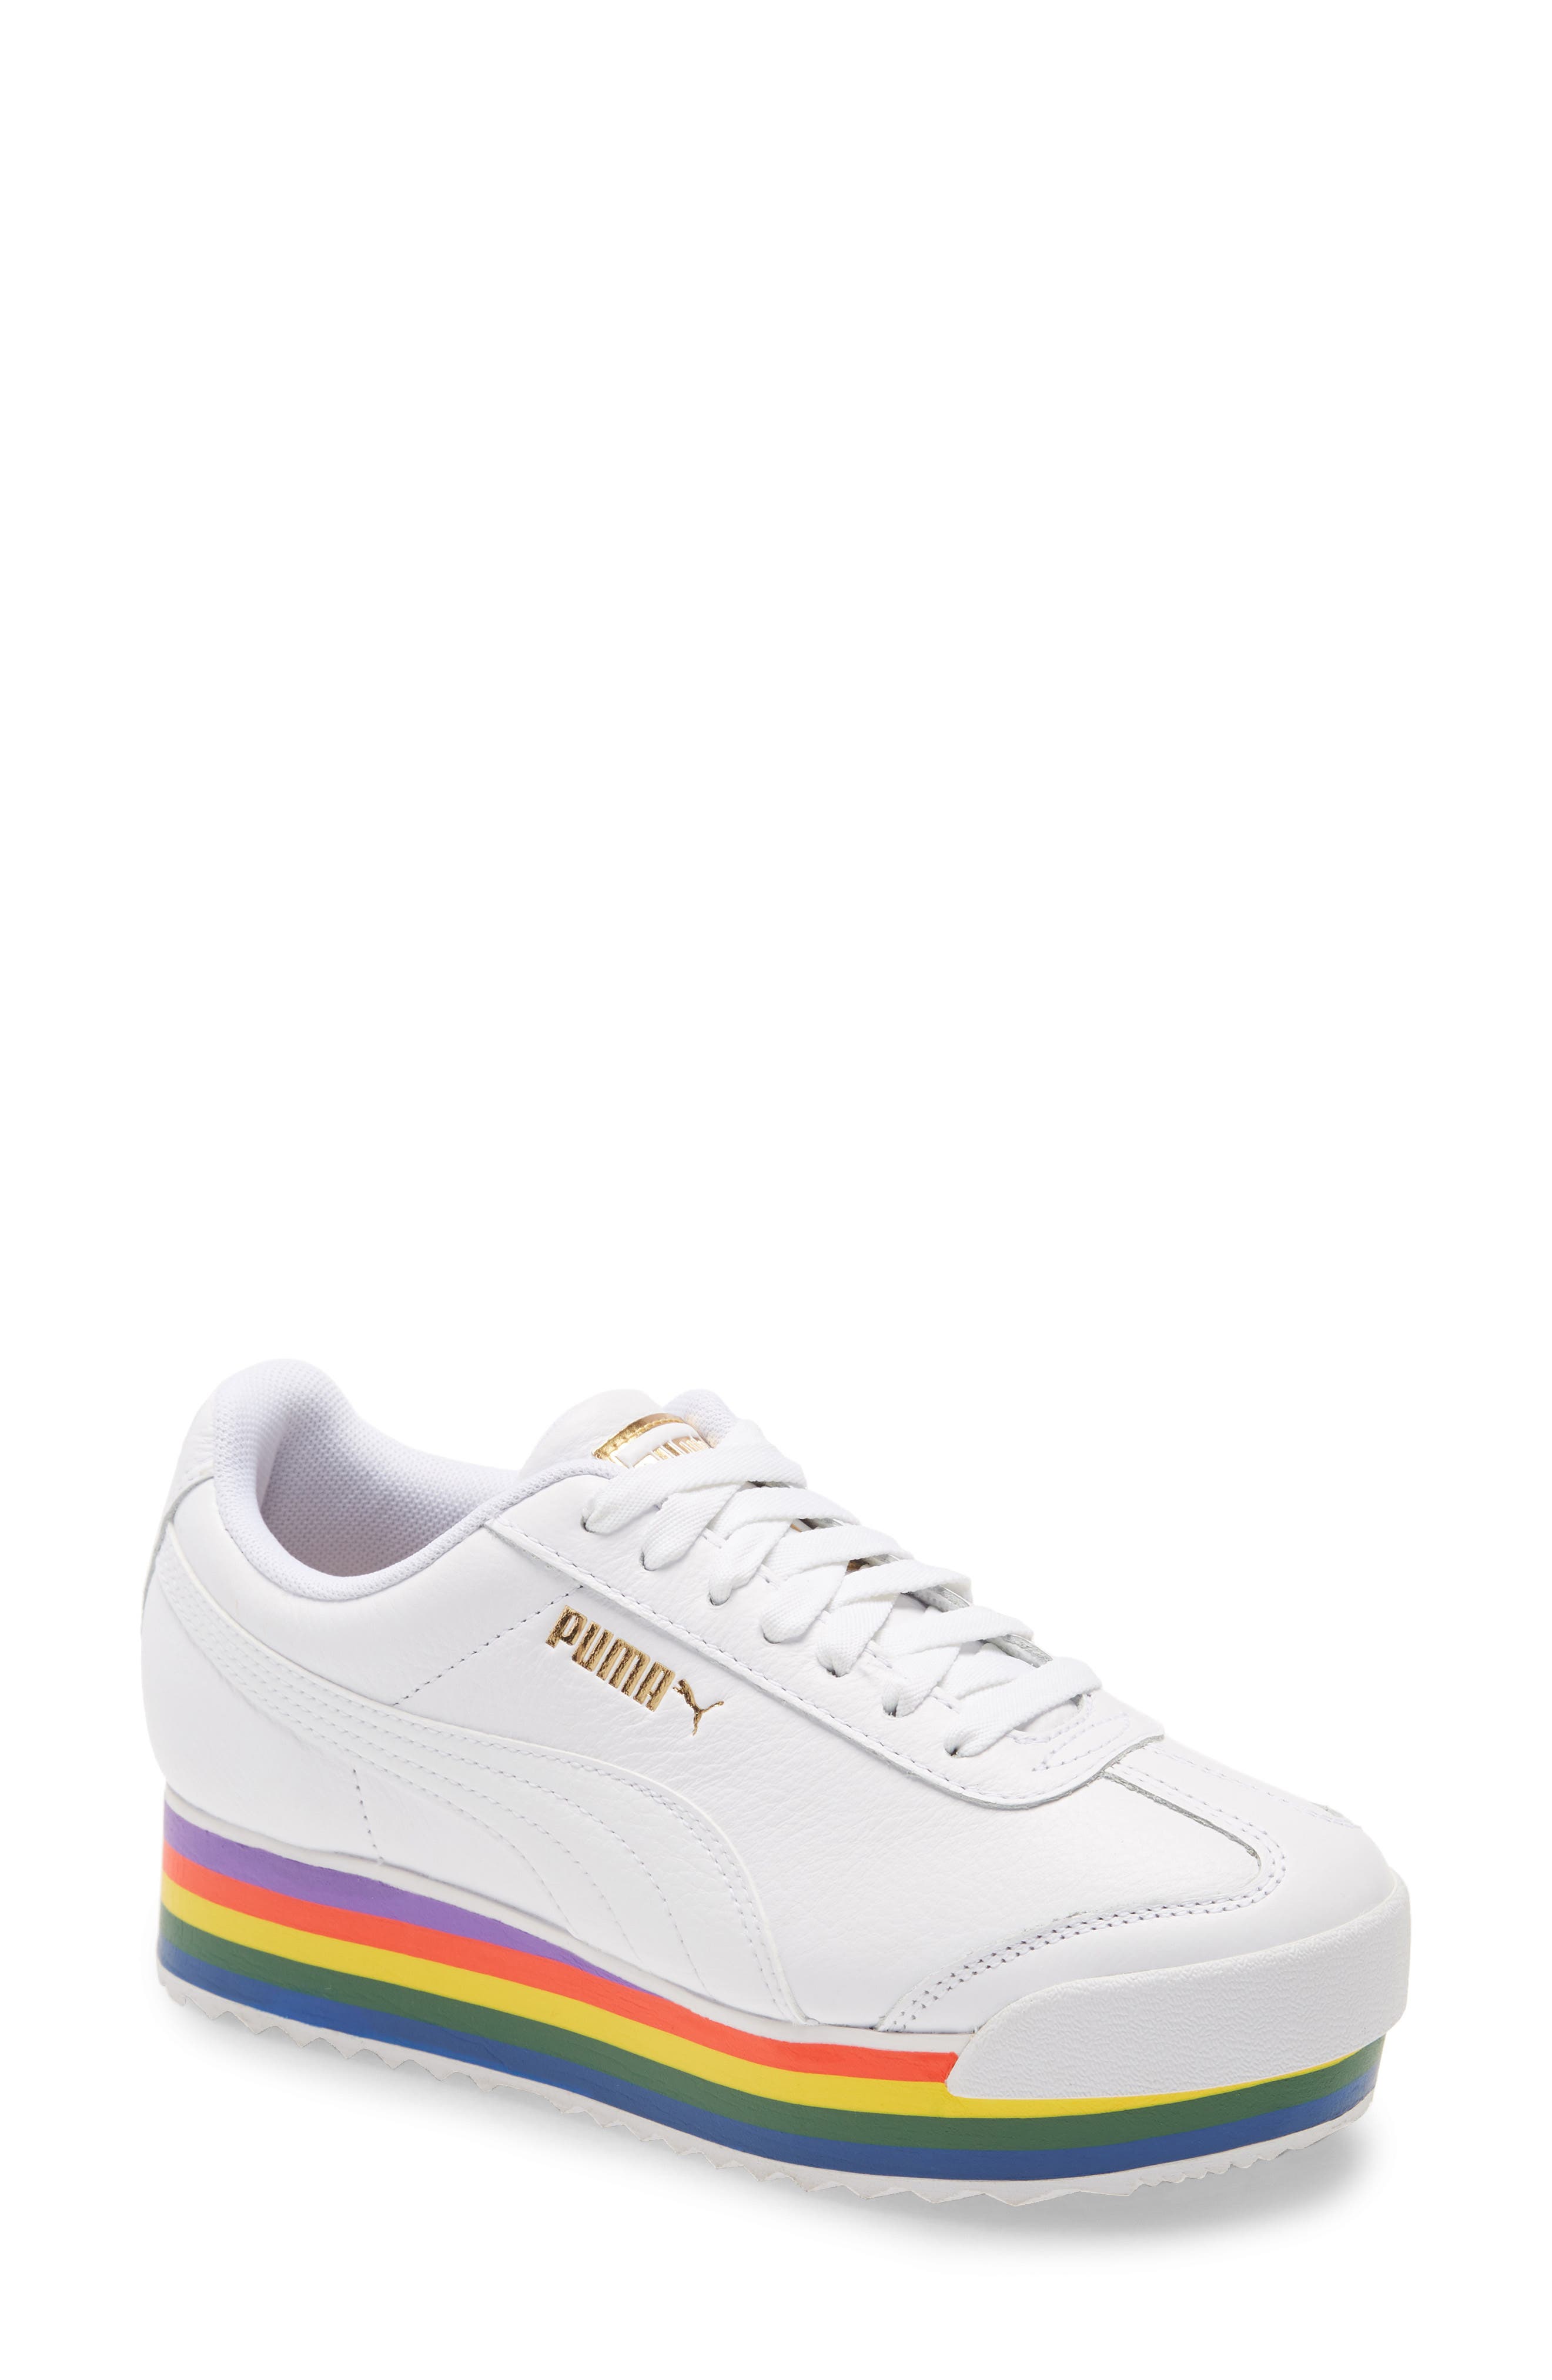 rainbow platform sneaker